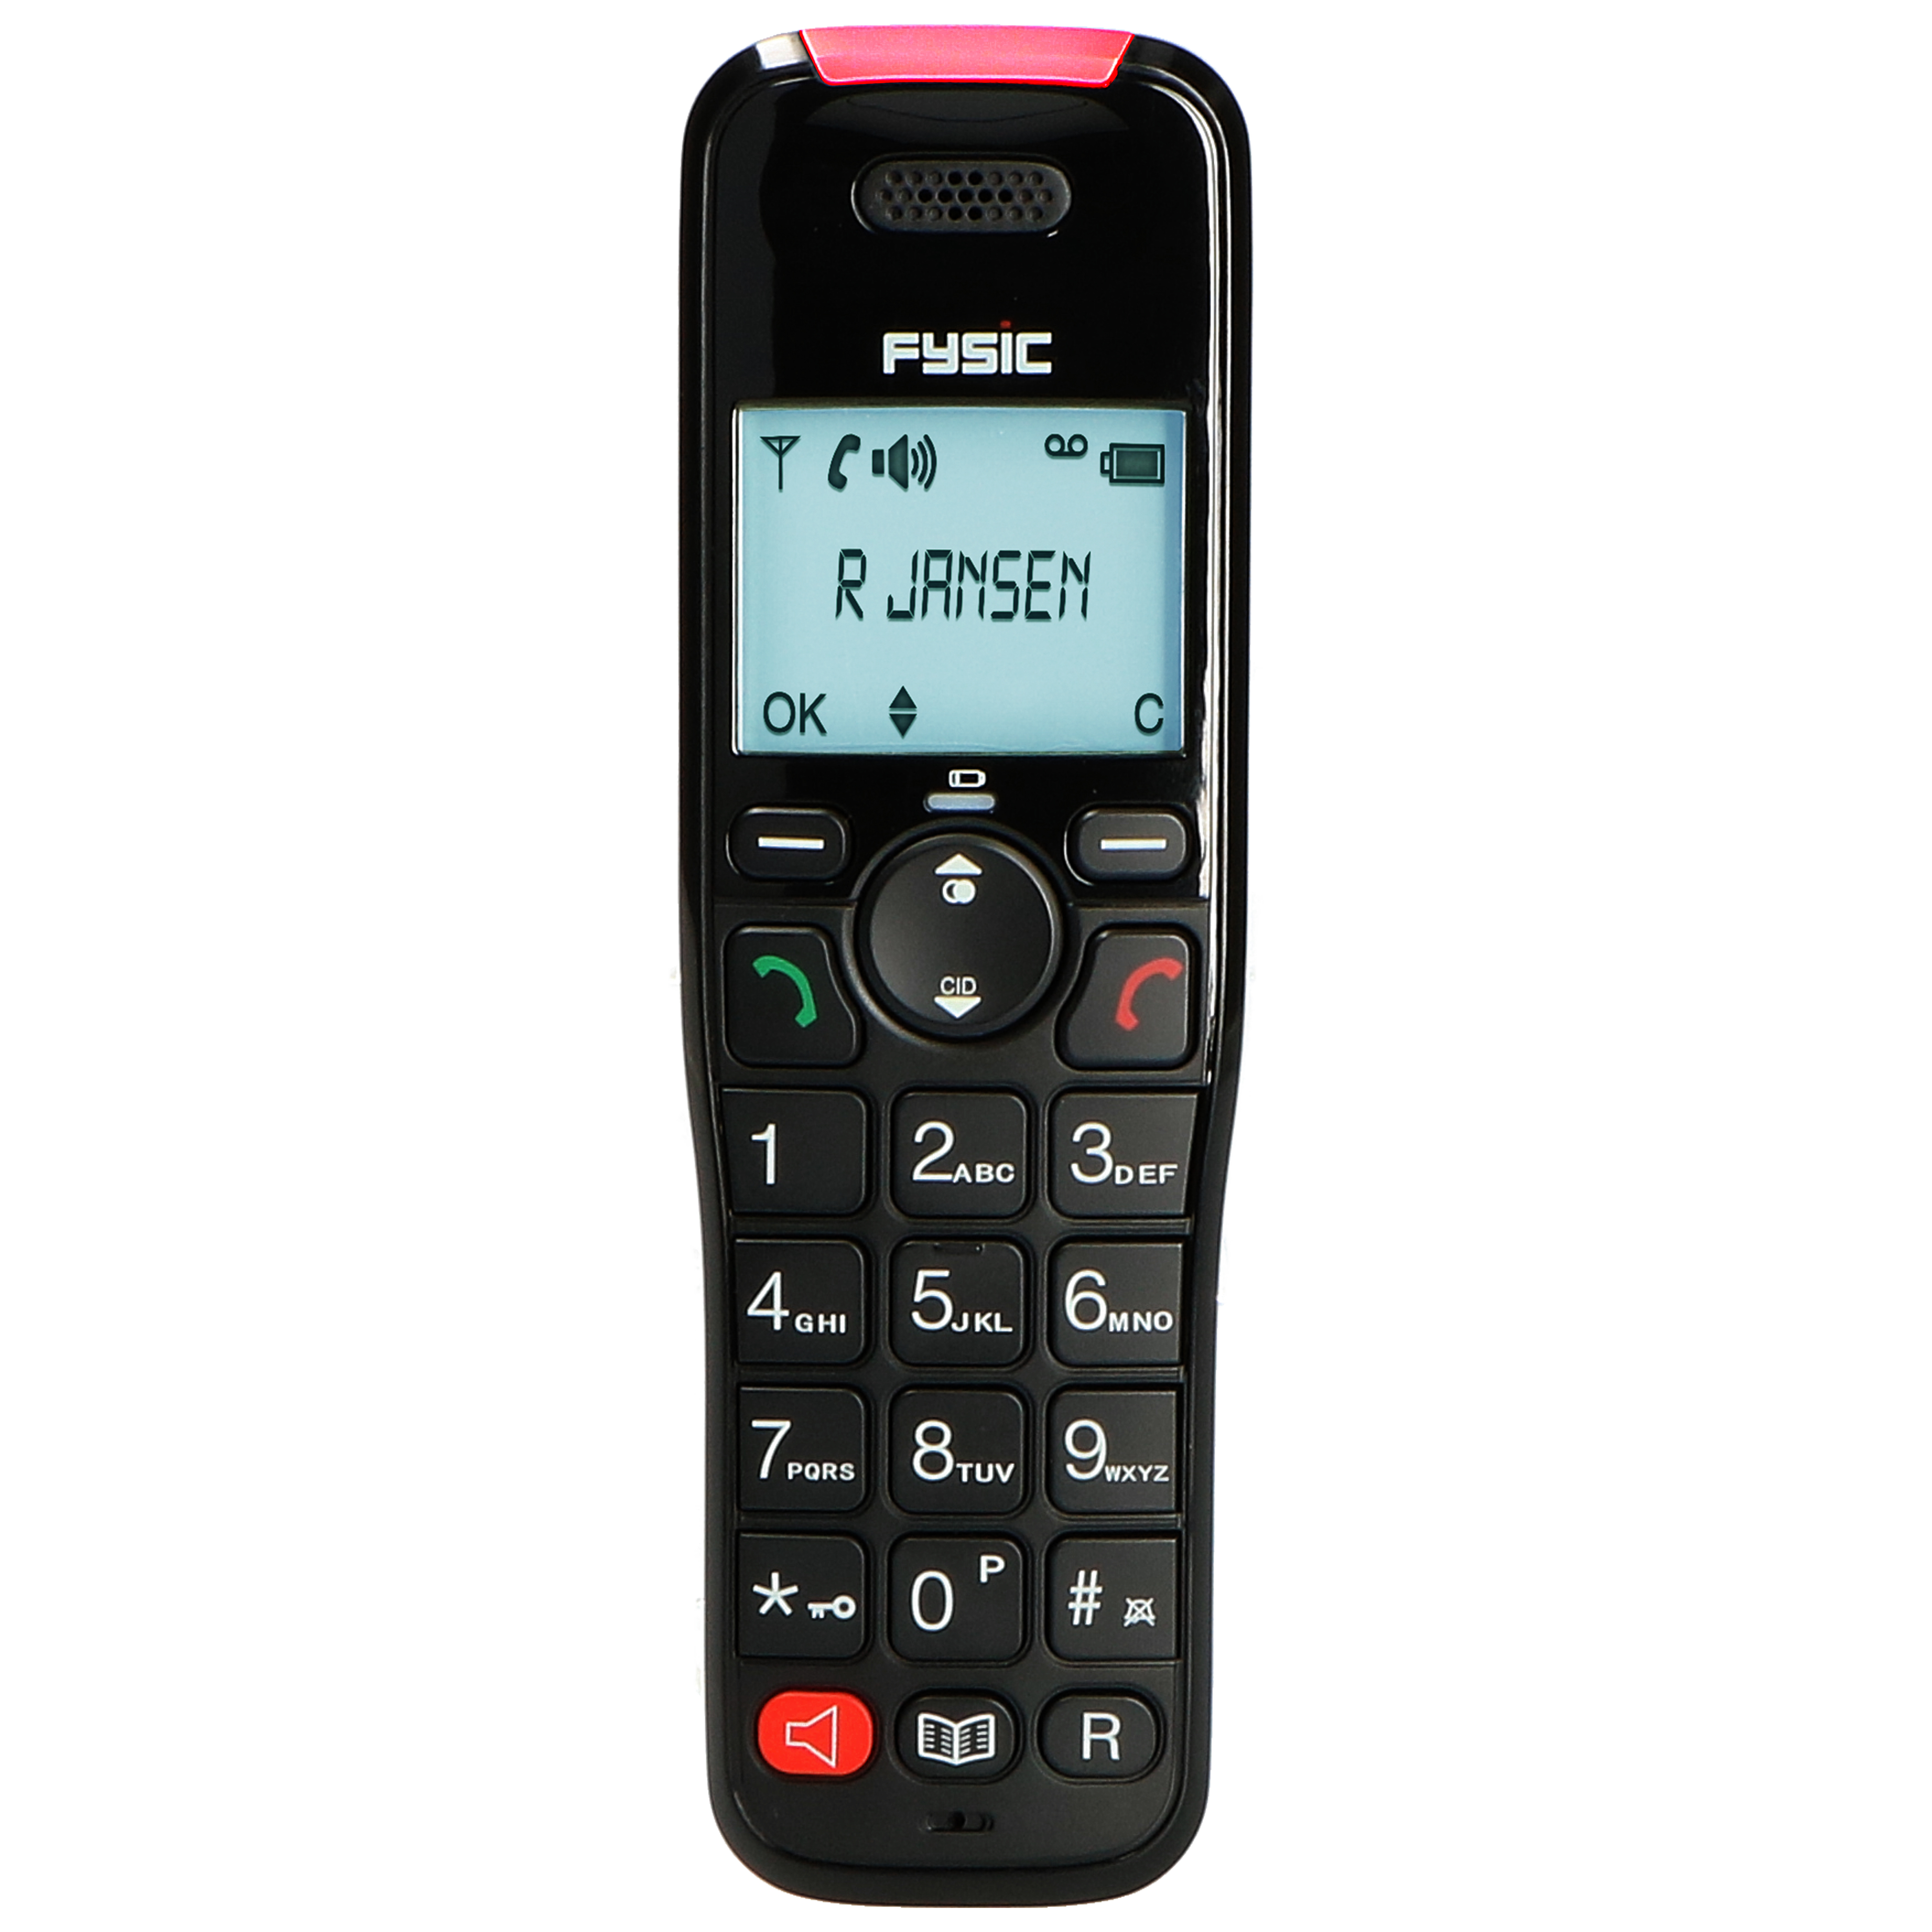 FYSIC FX-8025 - Seniorentelefon Handset Klingelverstärker Seniorentelefon mit und Klingelverstärker,großen Tasten,SOS-Taste extra mit